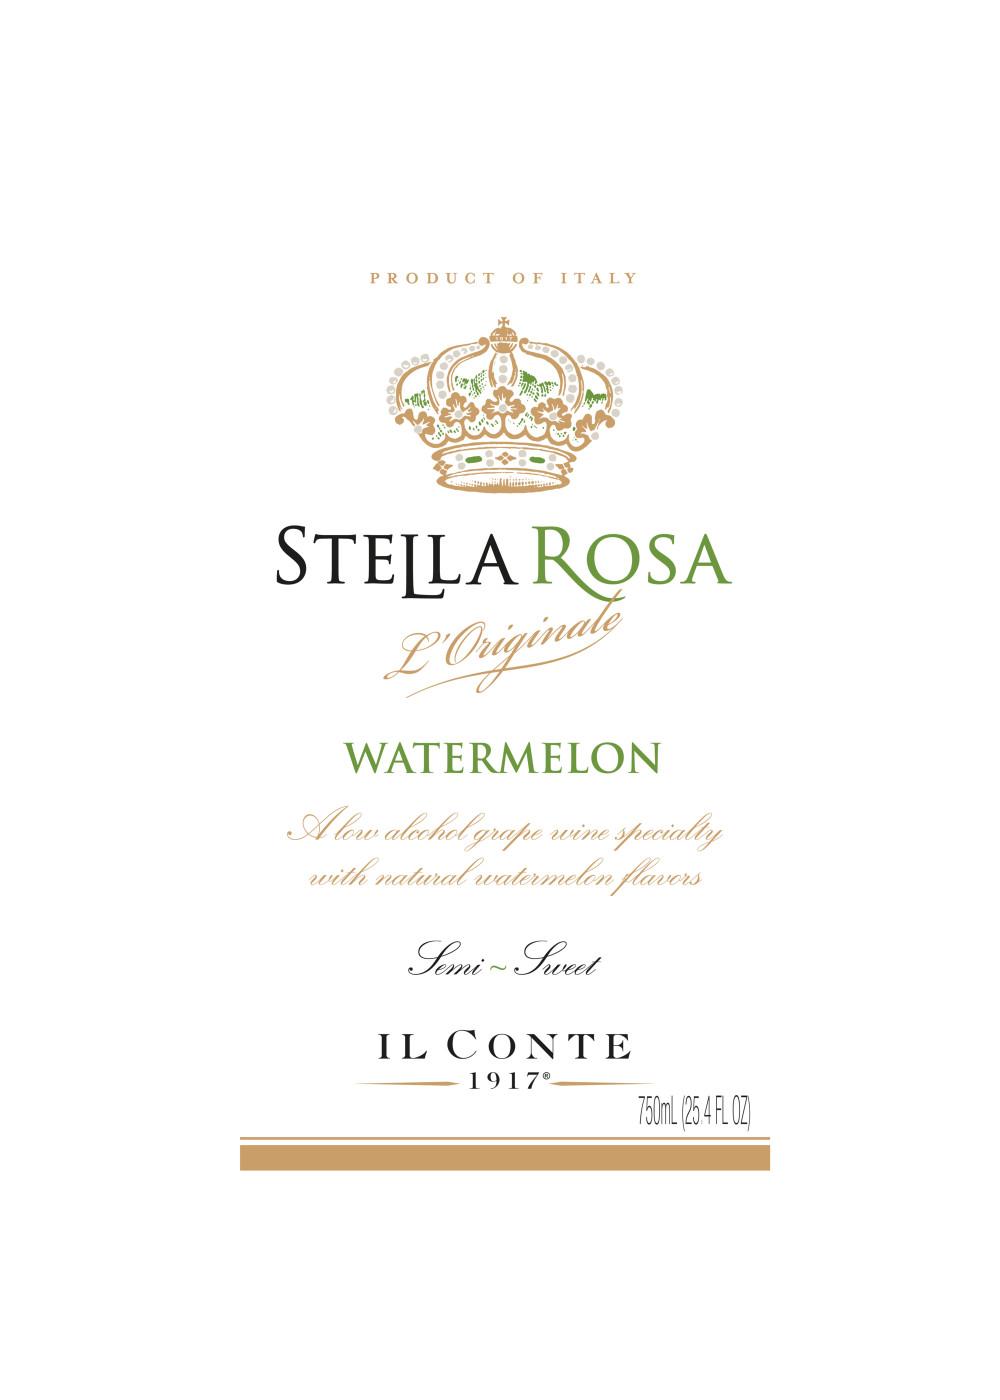 Stella Rosa Watermelon; image 2 of 7